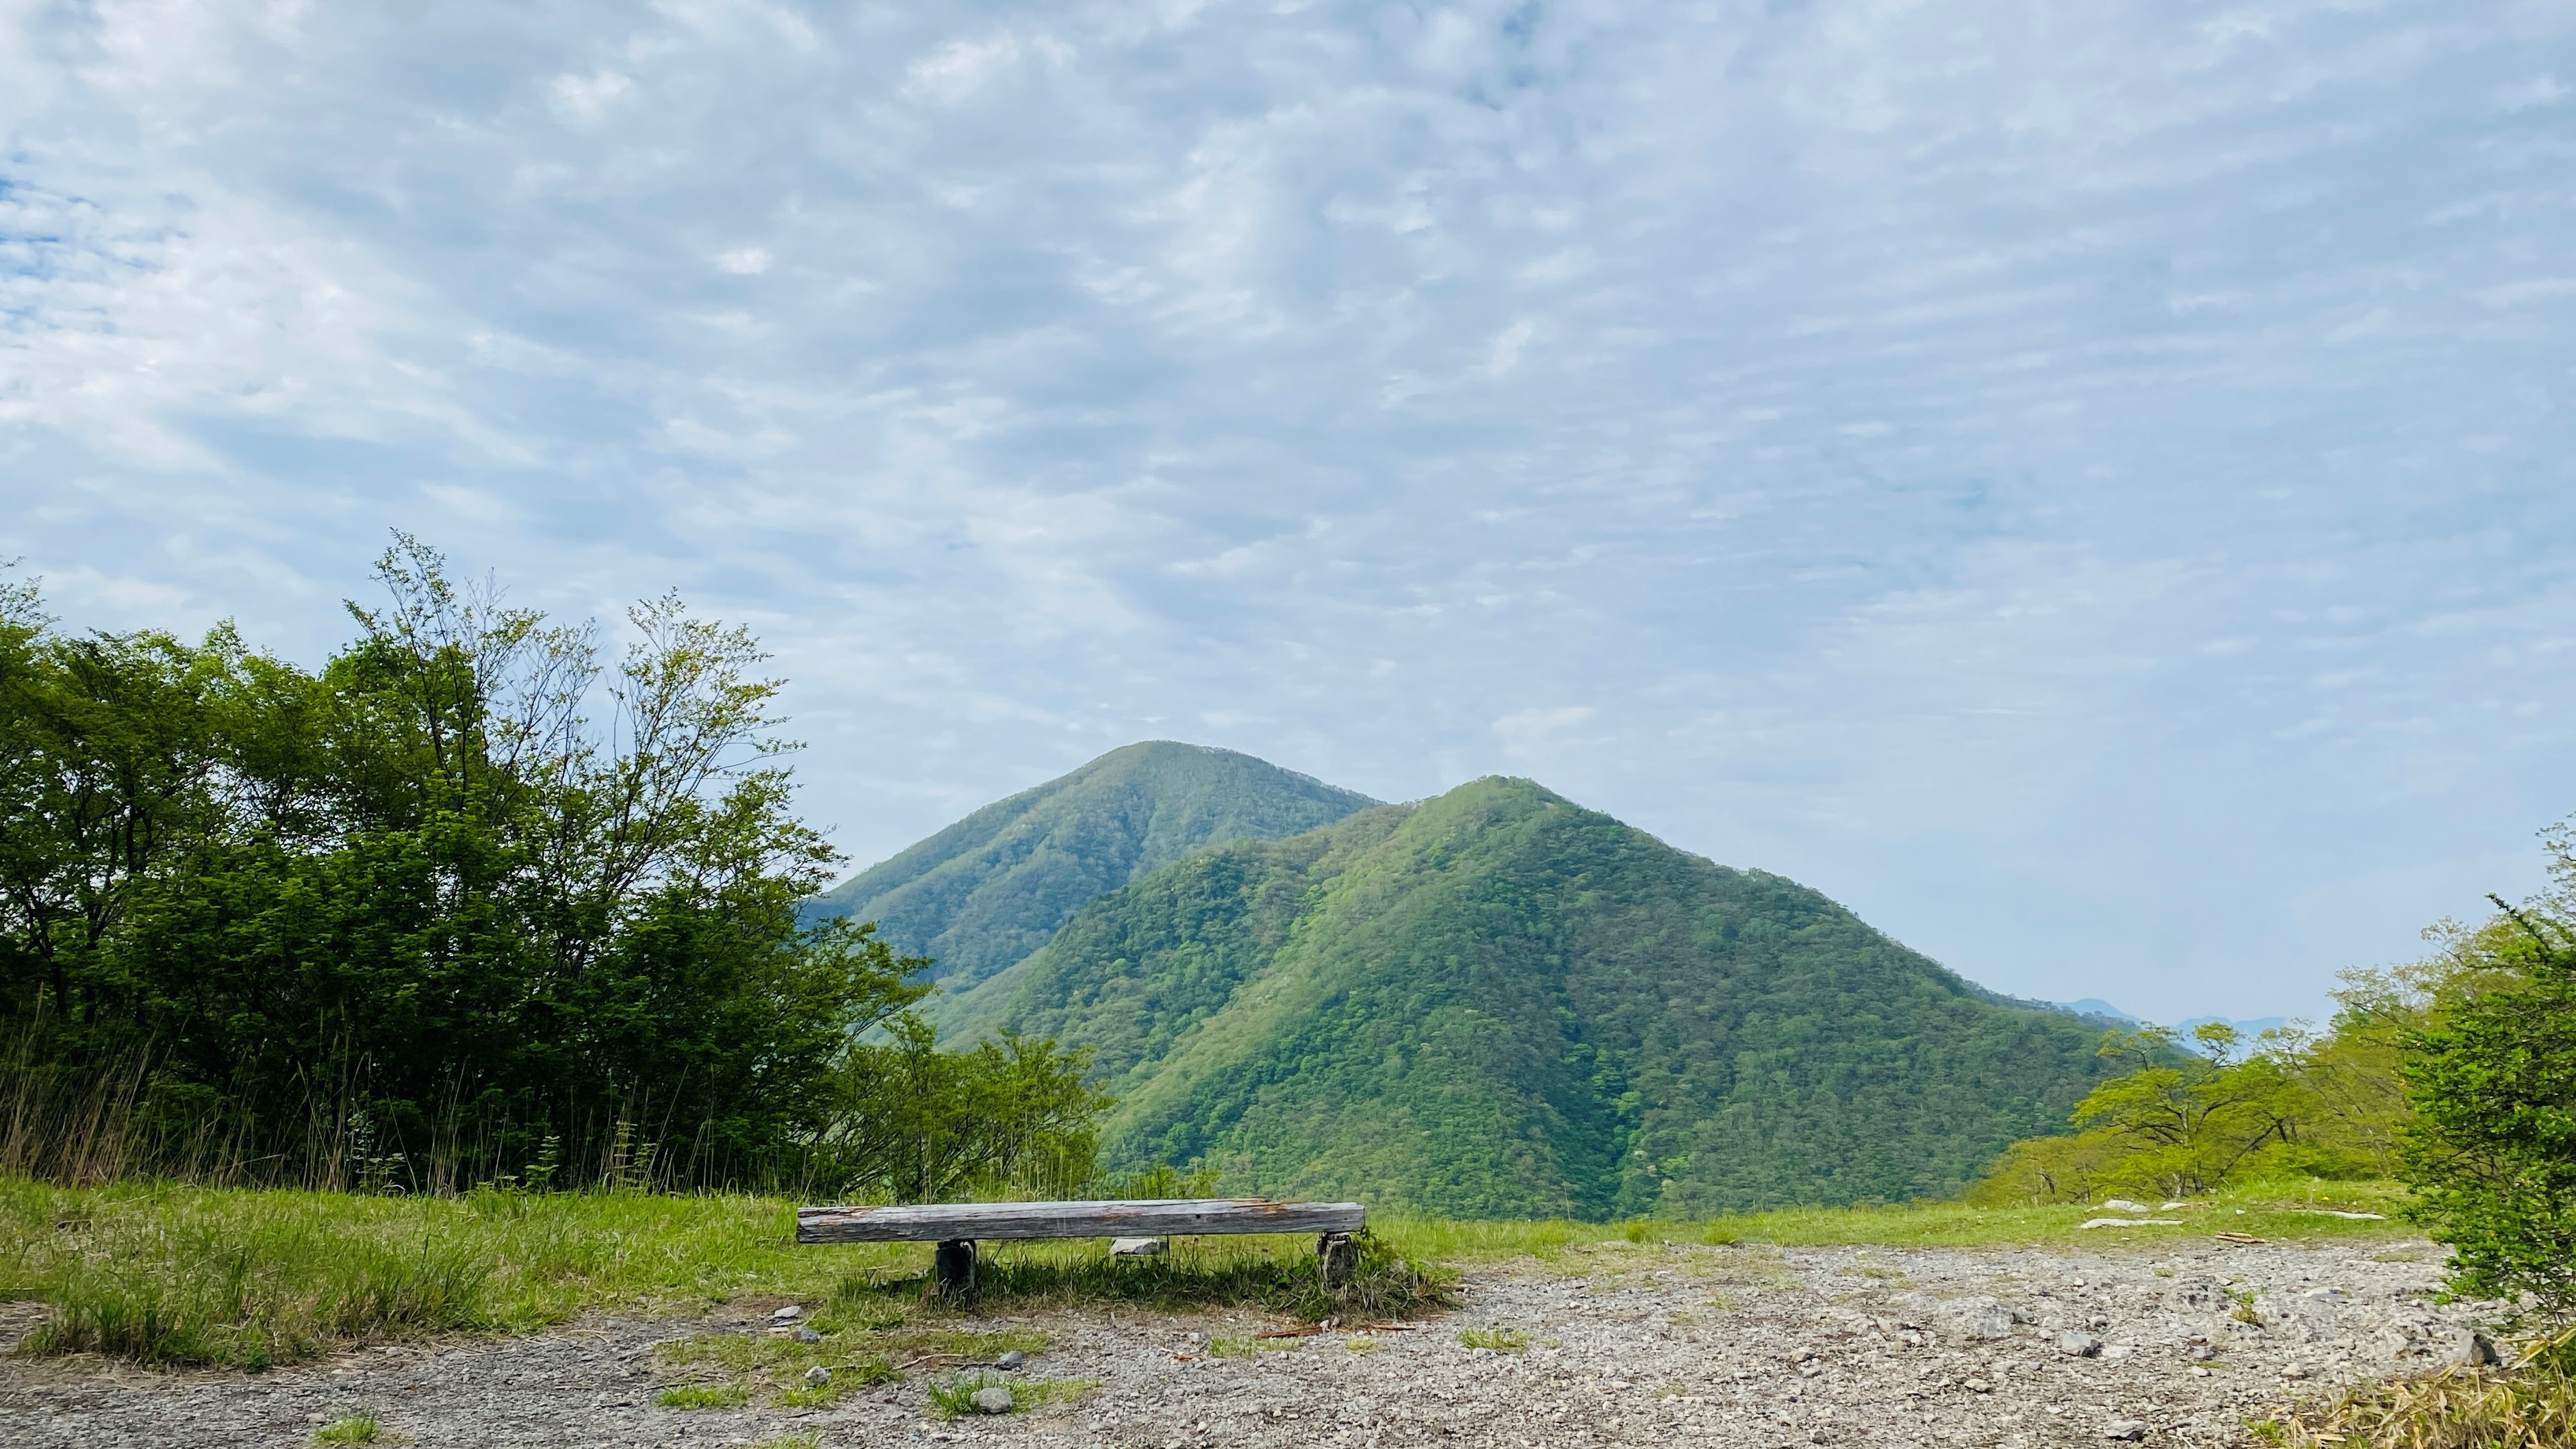 A view of Mt. Kurobi from Konuma Miharashi viewpoint